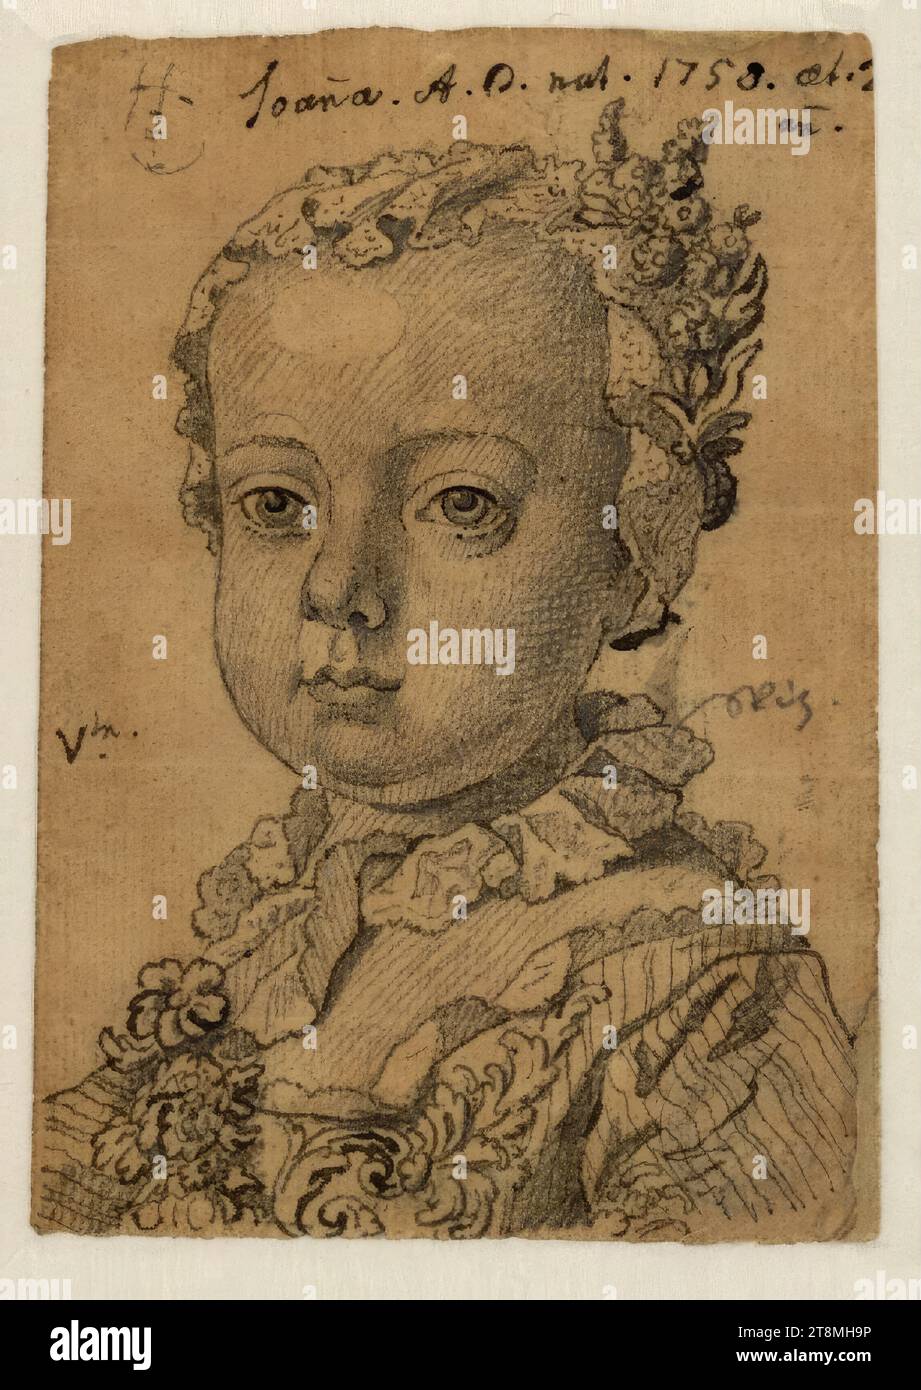 Archiduchesse Johanna, Martin van Meytens le Jeune (Stockholm 1695 - 1770 Vienne), dessin, craie, 12 x 8,4 cm, r.o. 'Joana.A.D.nat.1750.aet.2.an' ; ml 'VM Banque D'Images